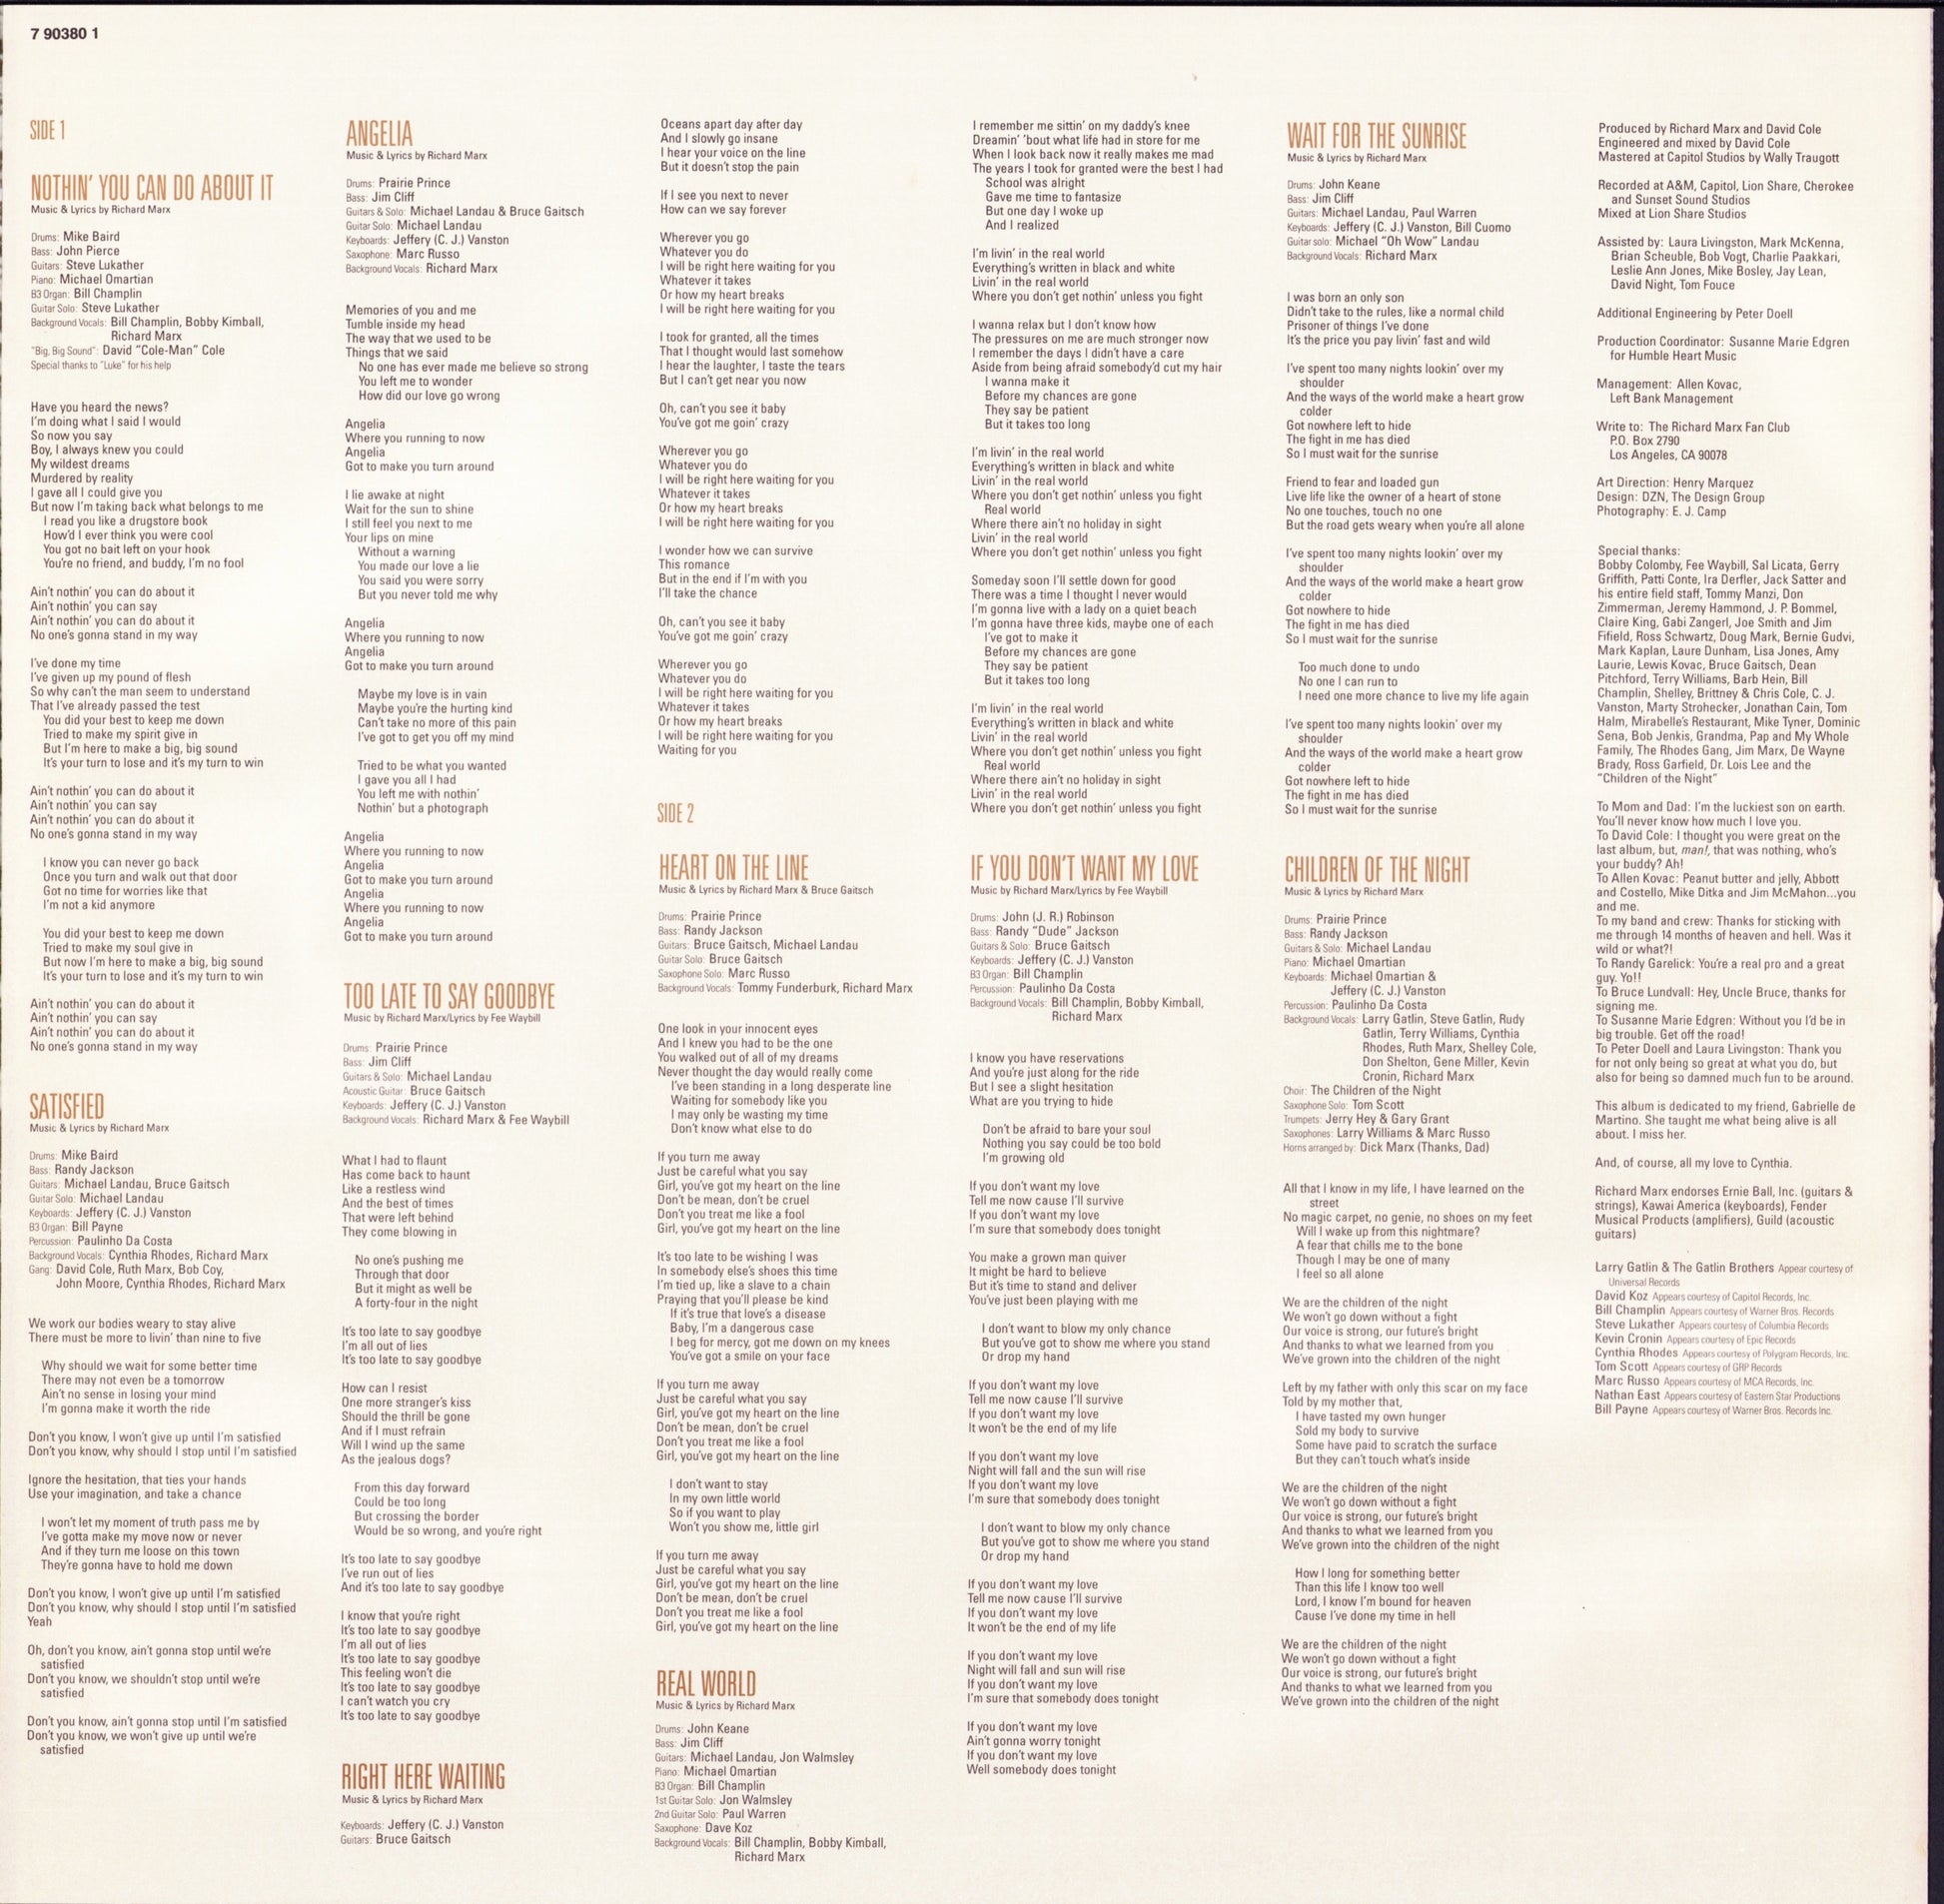 Richard Marx – Repeat Offender Vinyl LP